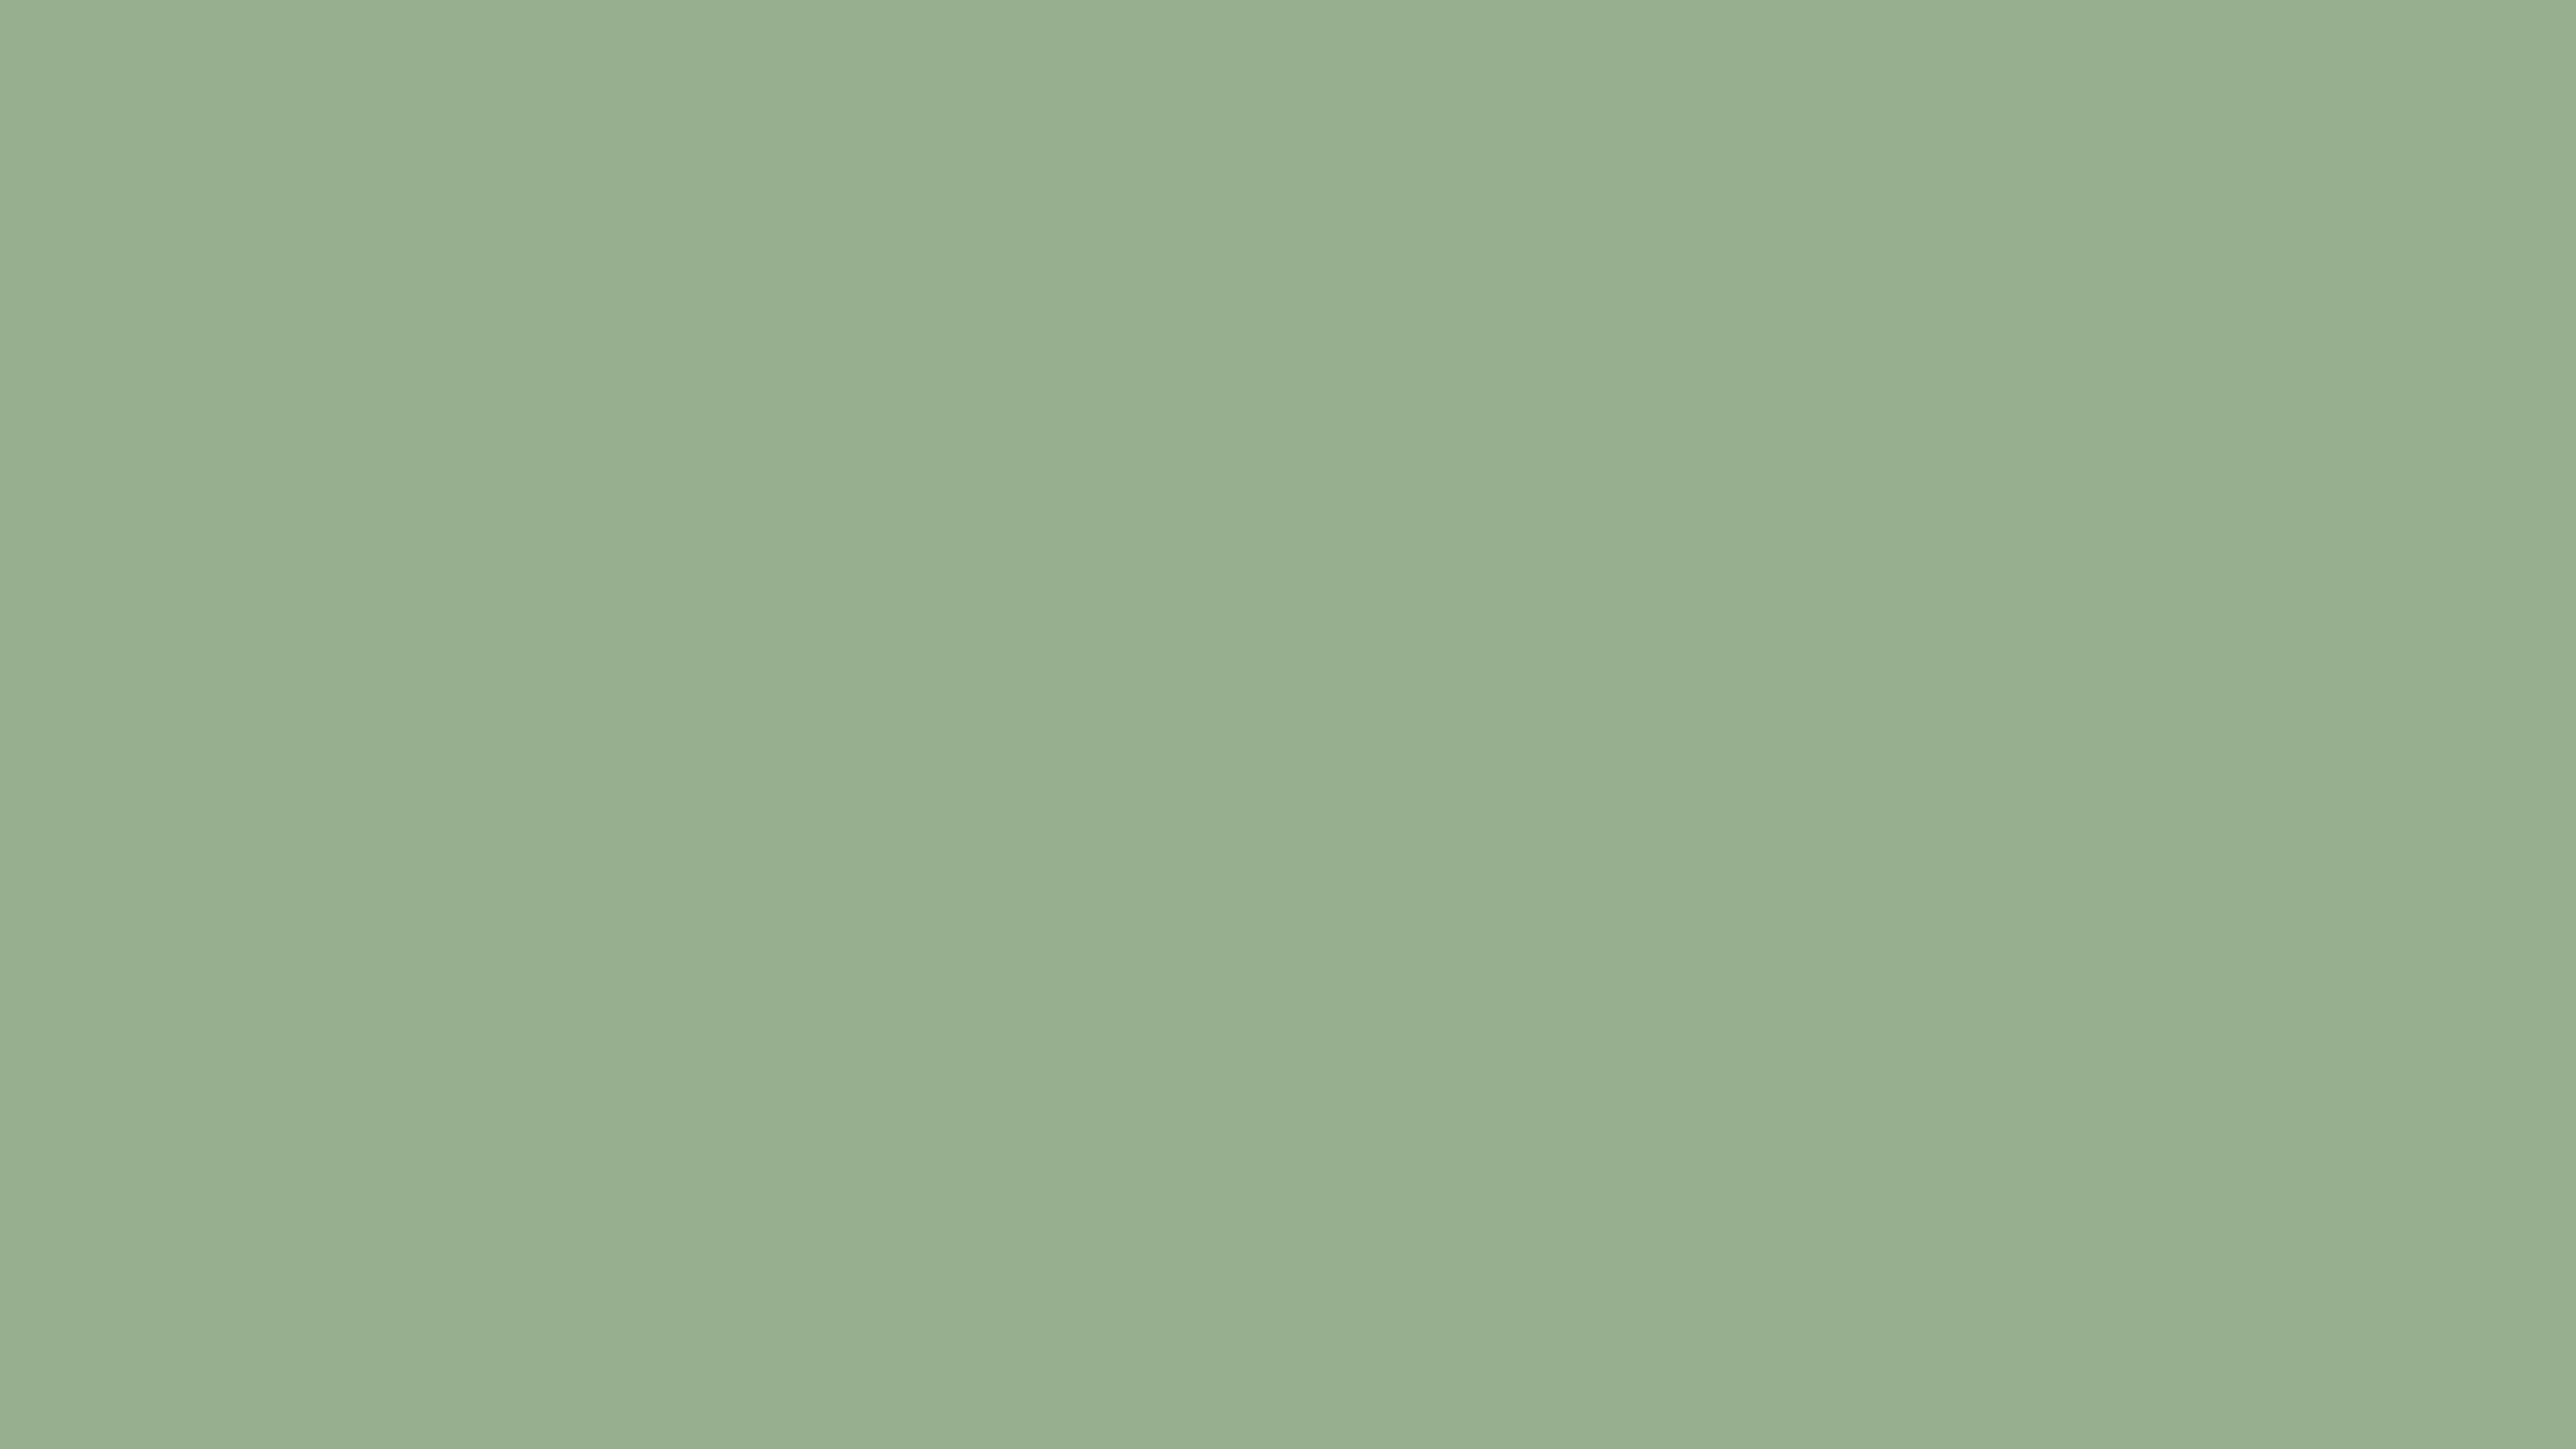 Greenish Grey Solid Color Background Image Free Image Generator